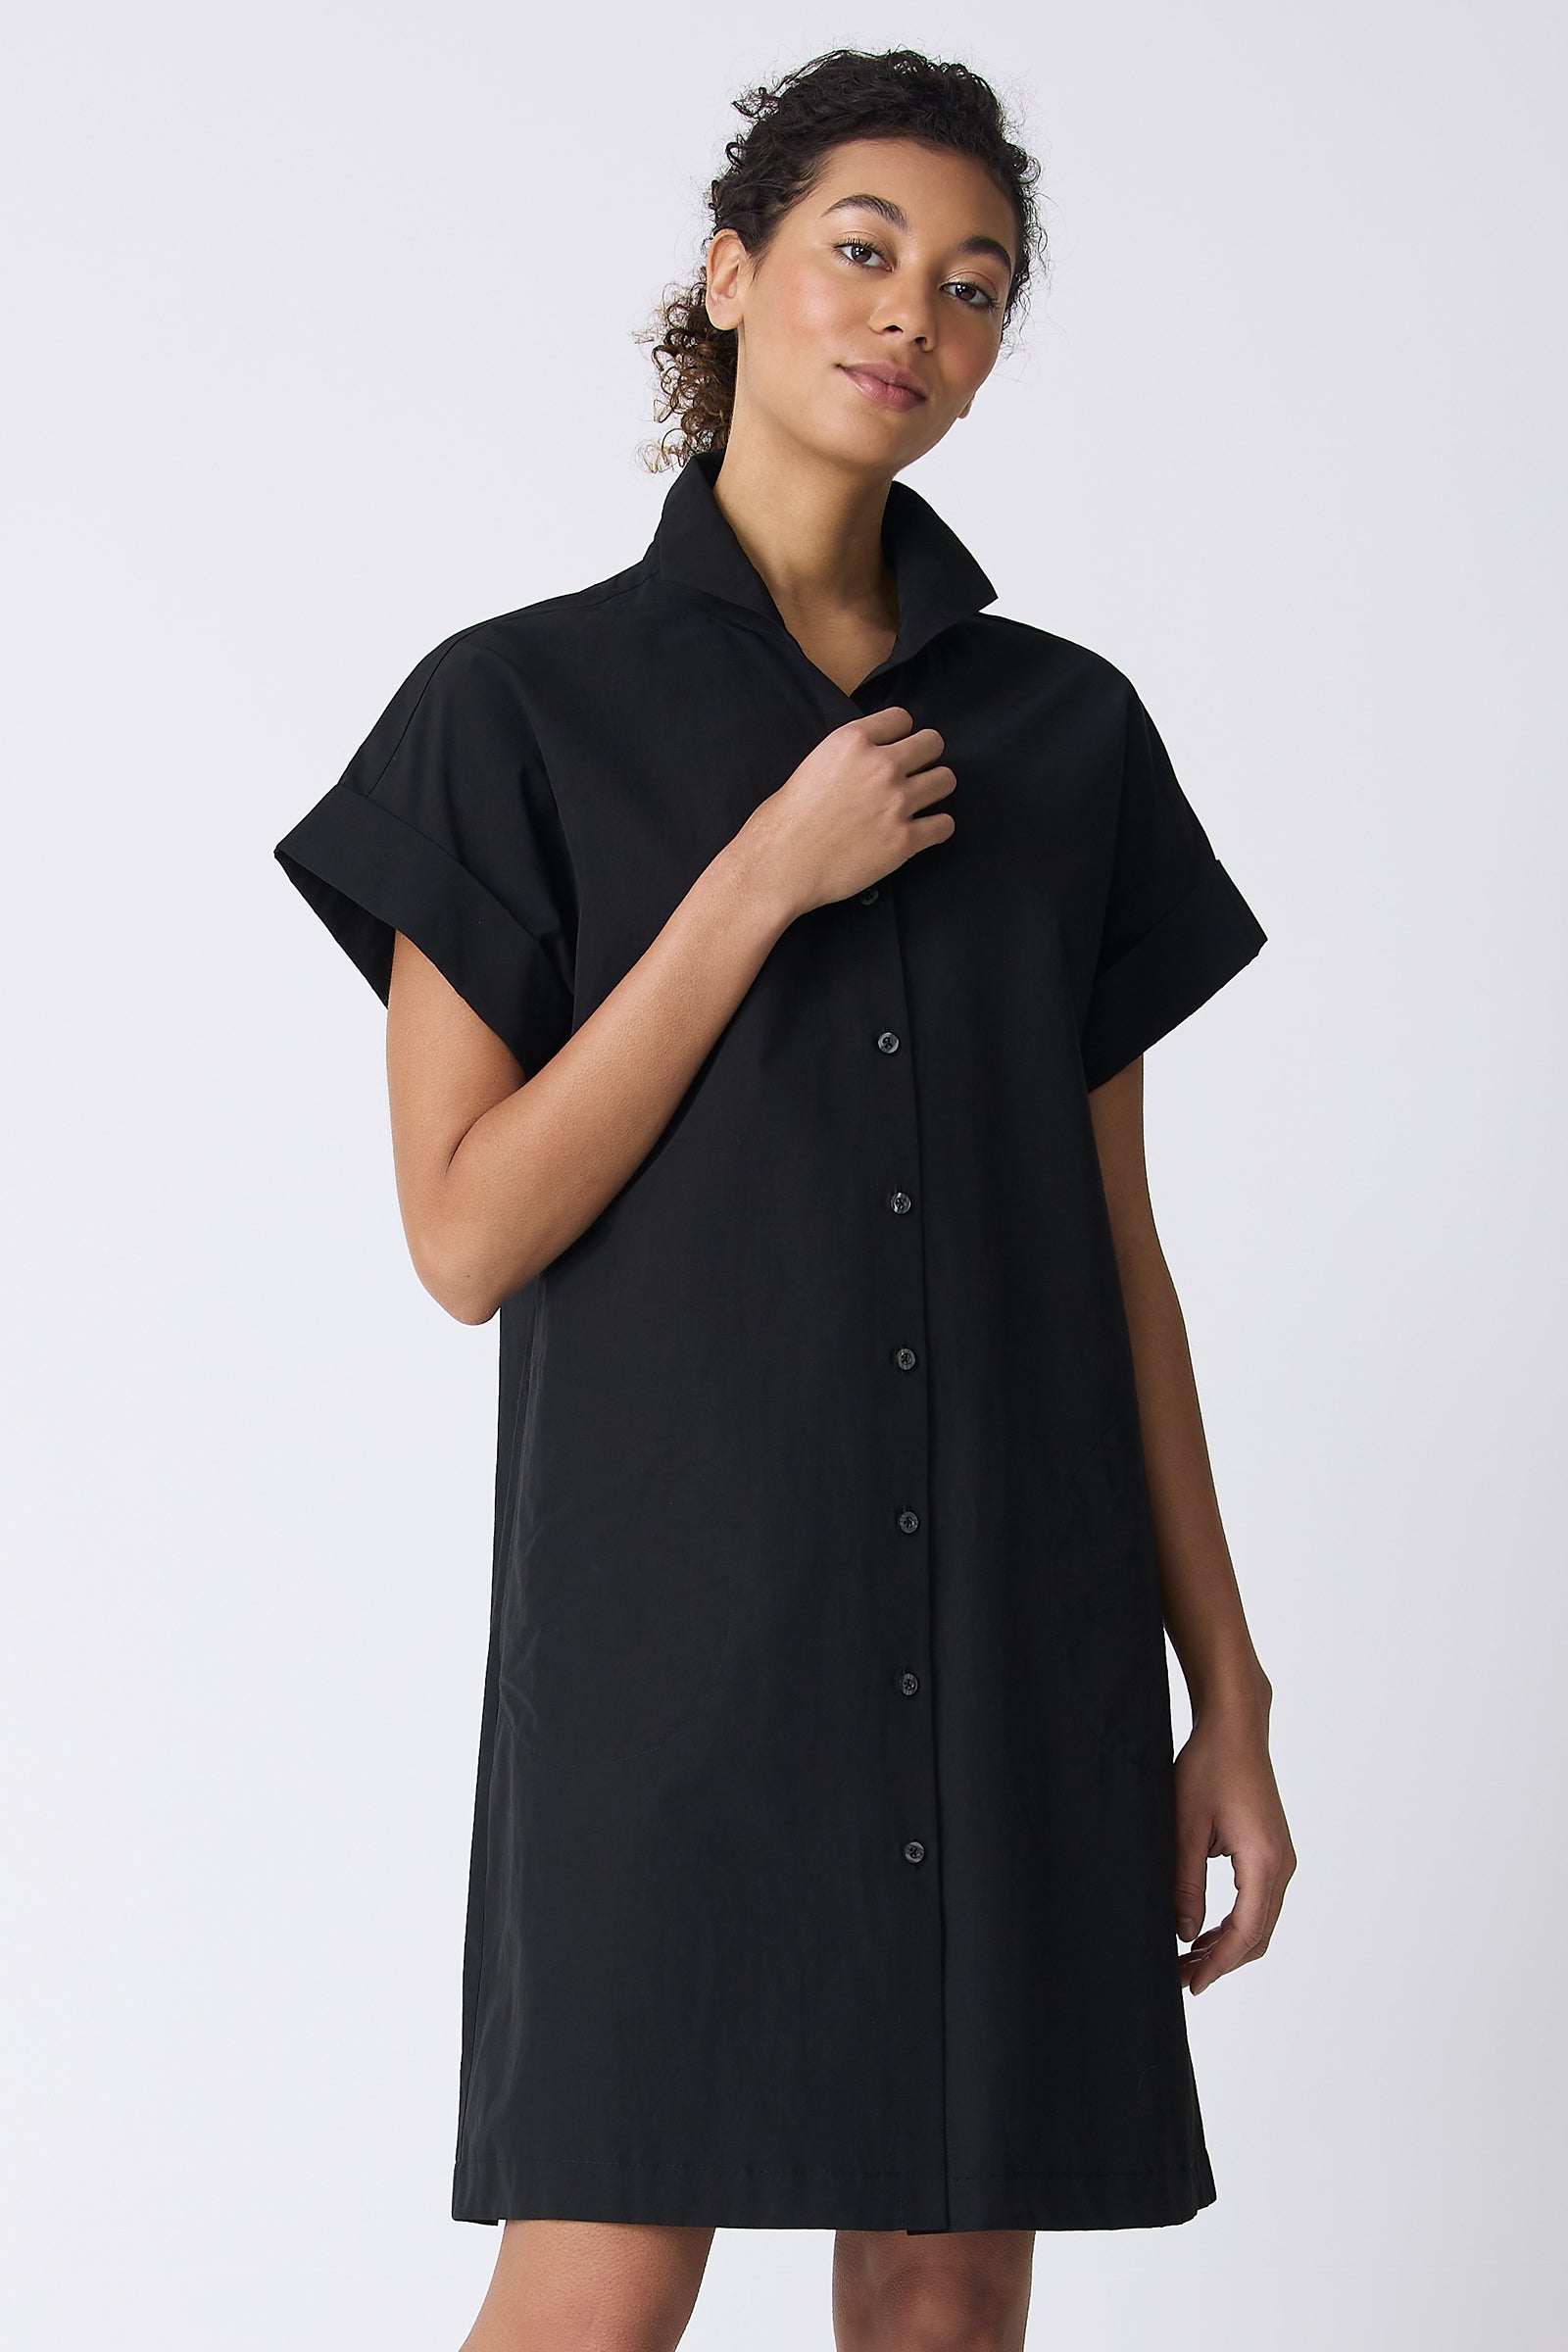 Kal Rieman Holly Kimono Dress in Black on model touching shirt front view